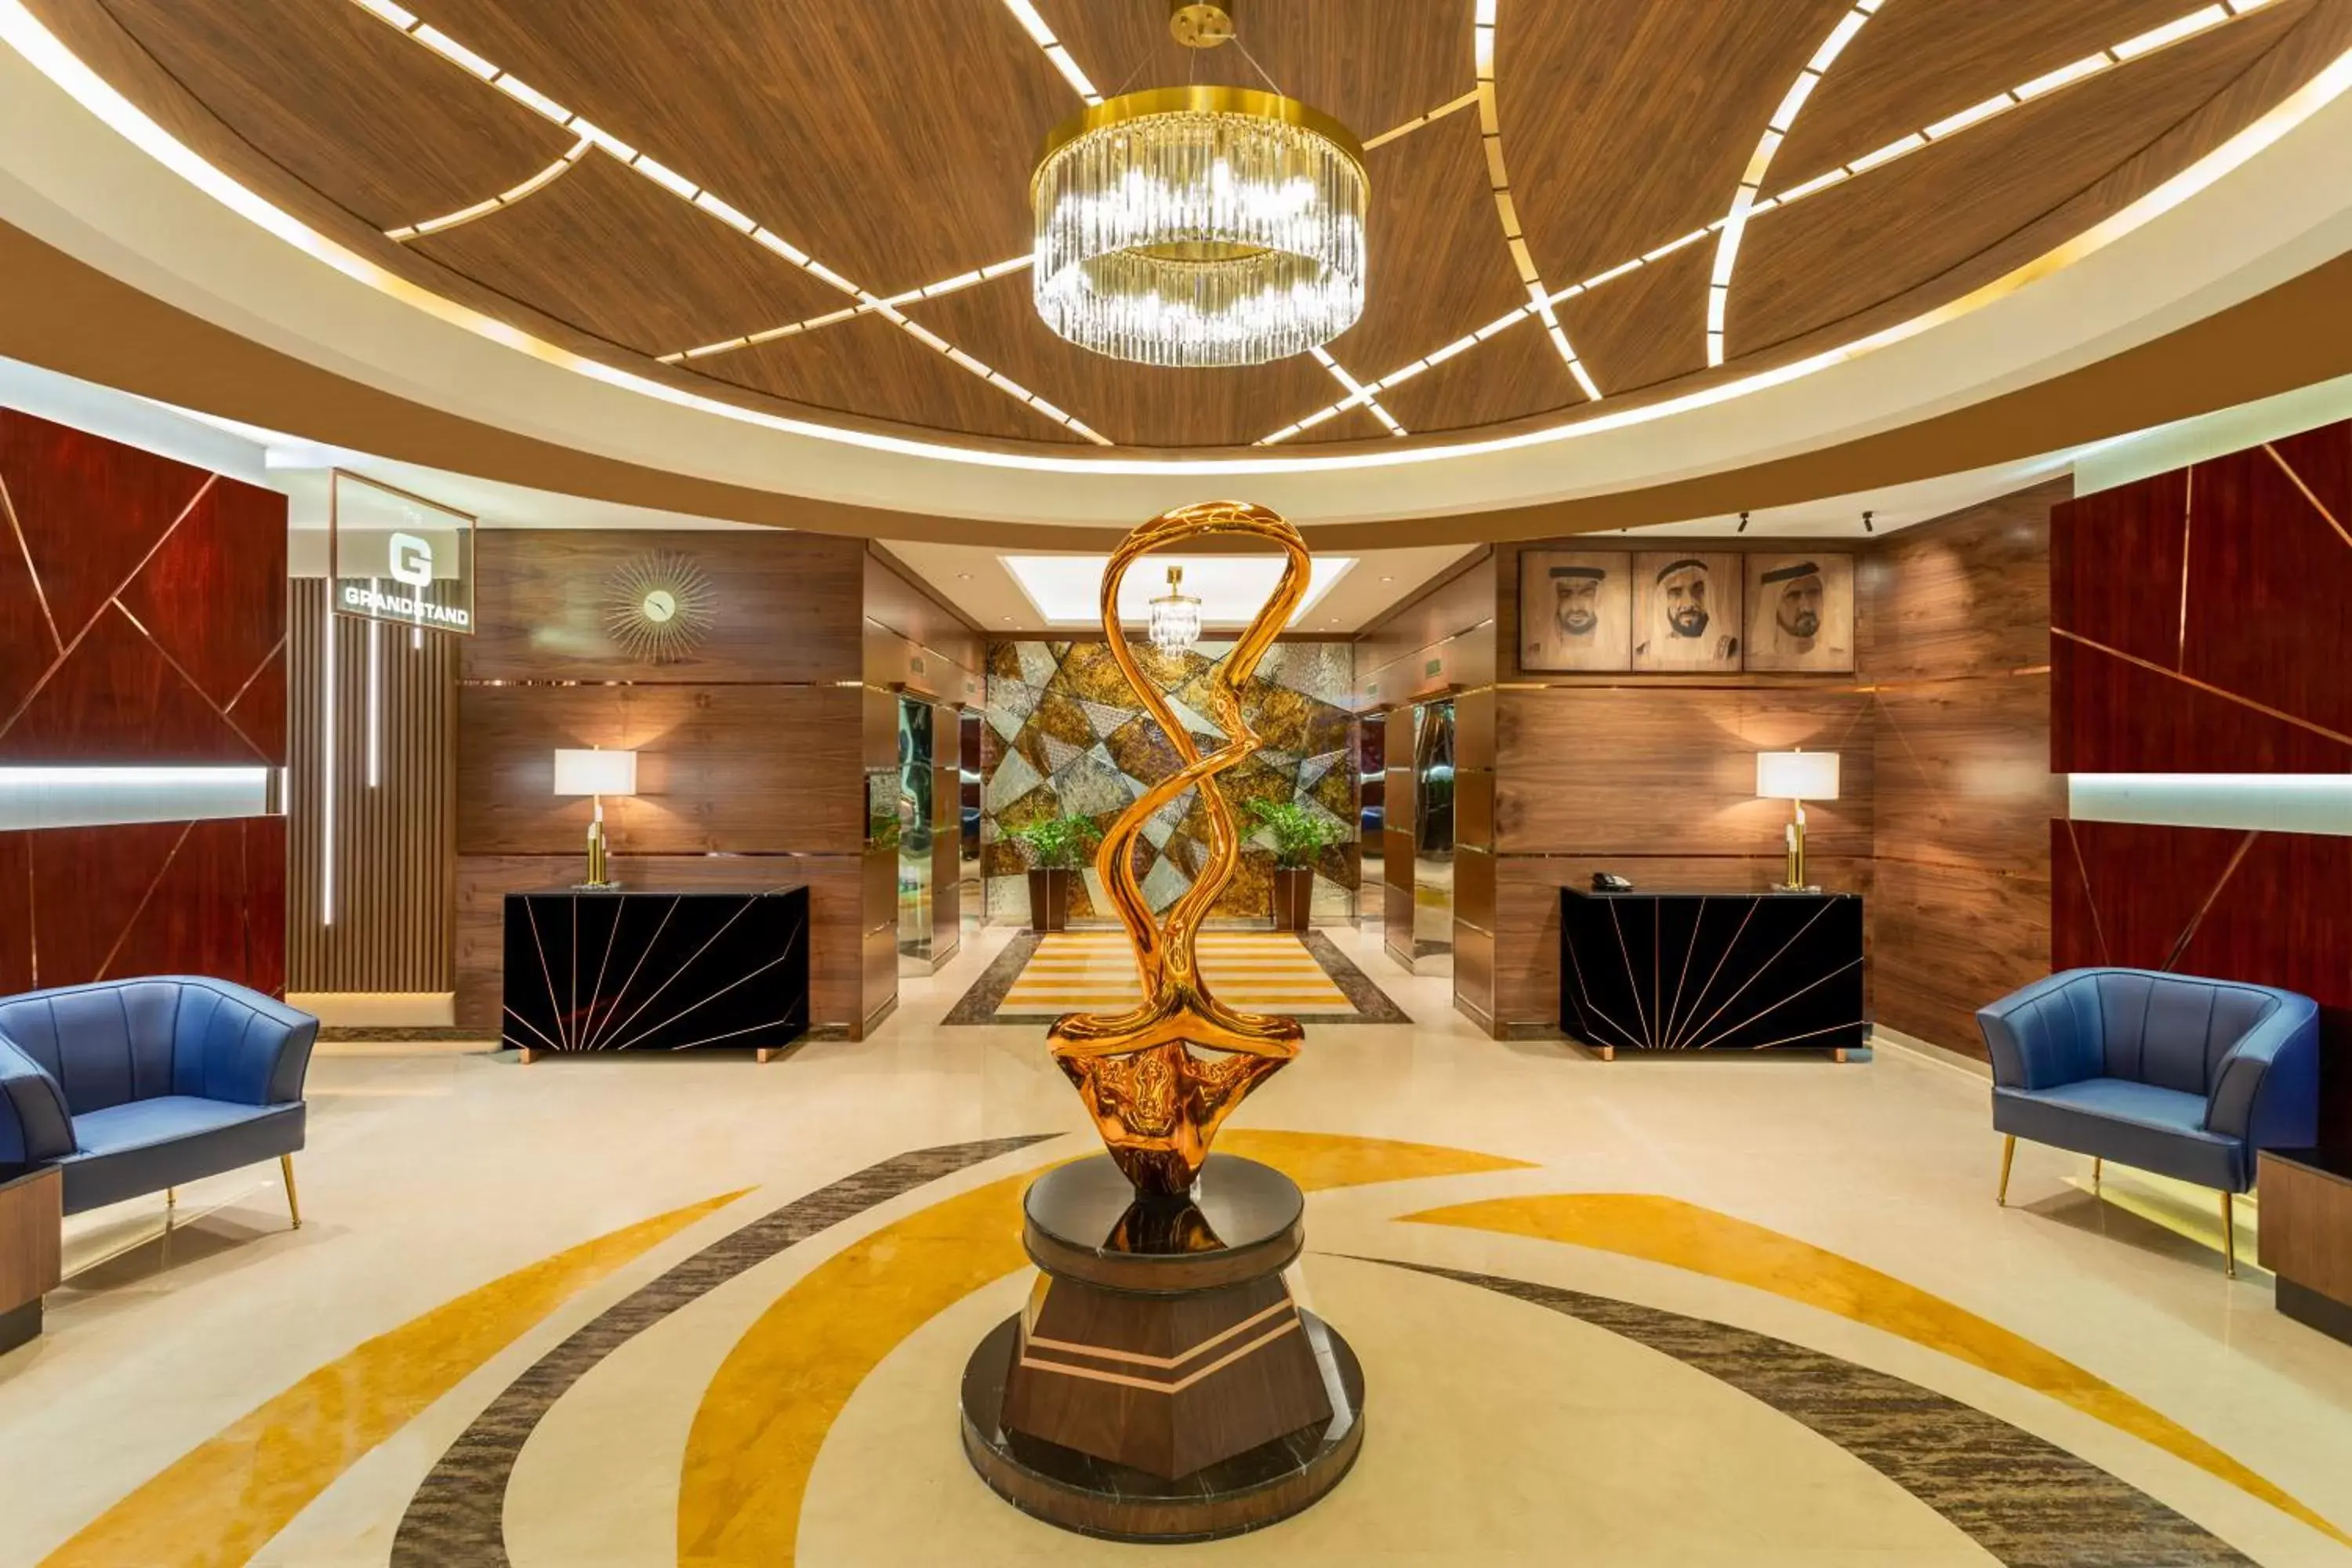 Lobby or reception, Lobby/Reception in Park Regis Kris Kin Hotel